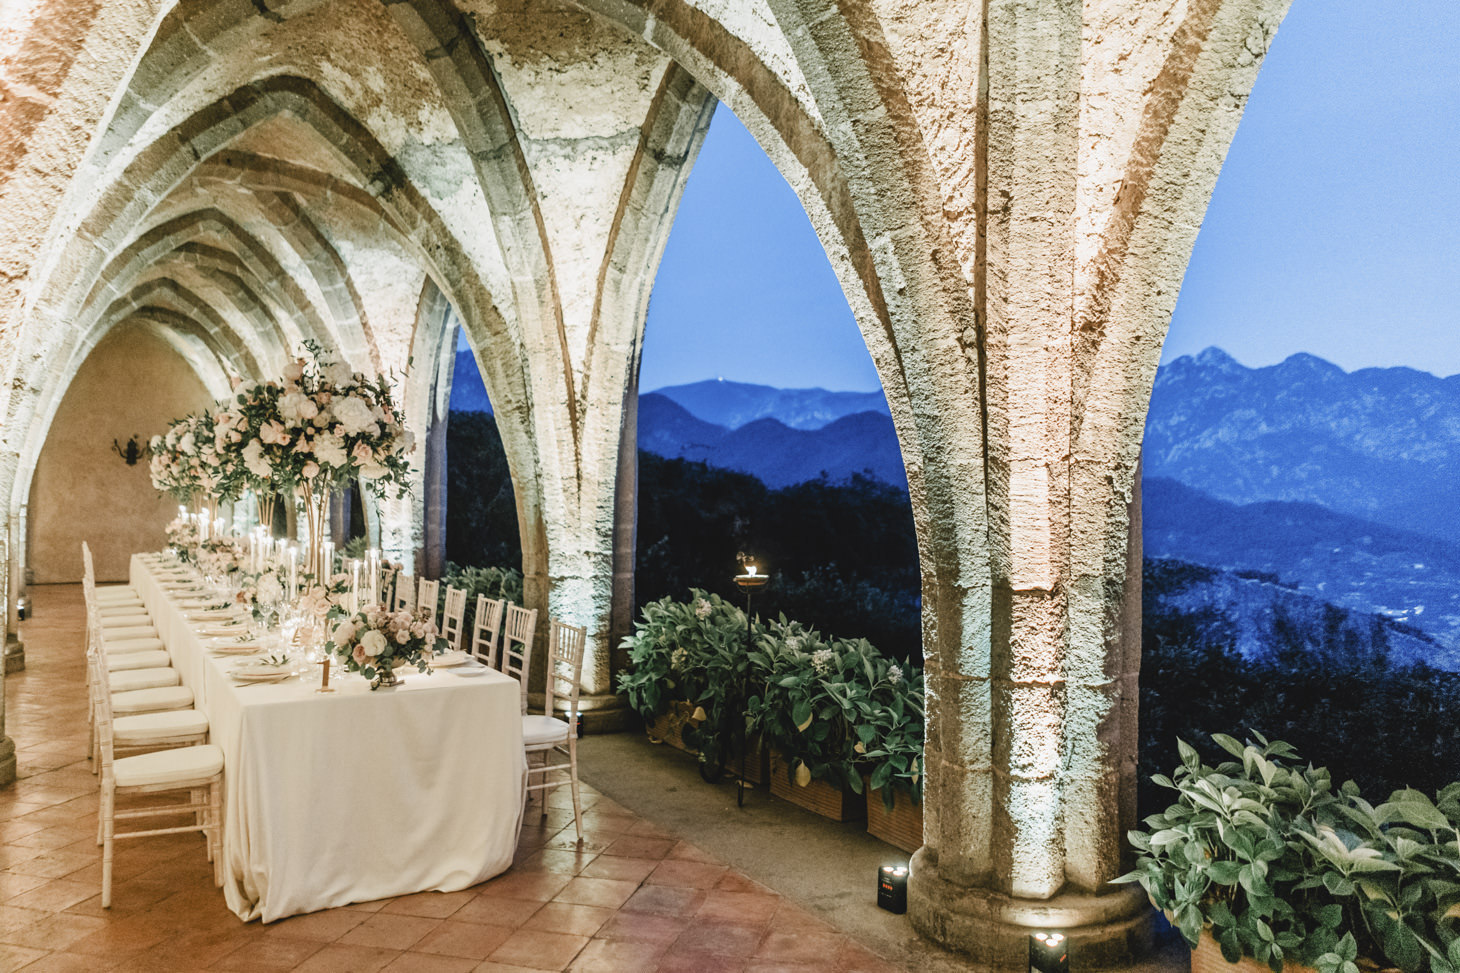 Wedding banquet in the crypt of Villa Cimbrone